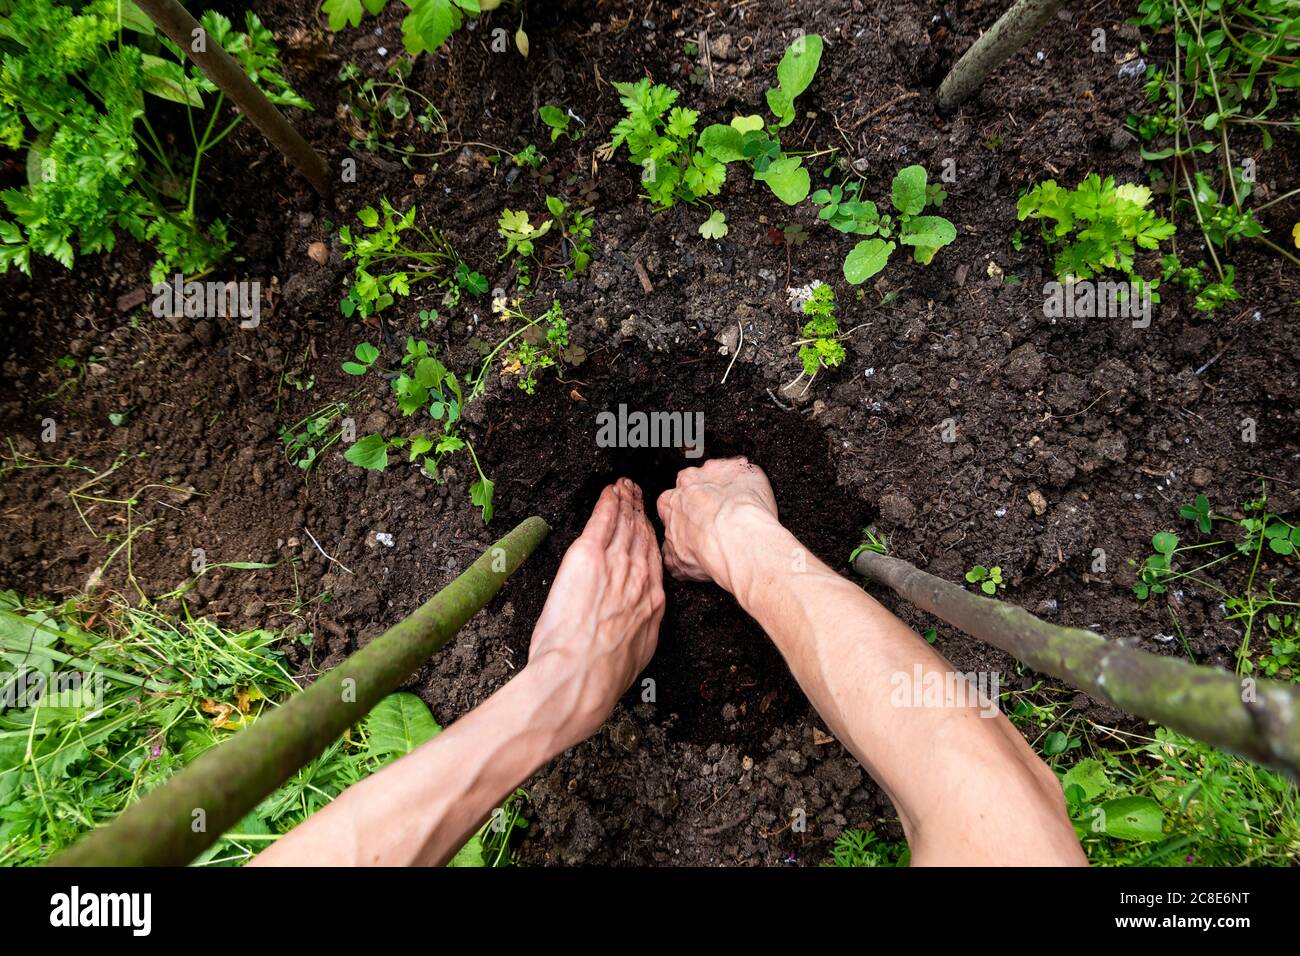 Hands of man digging dirt amidst plants in organic garden Stock Photo